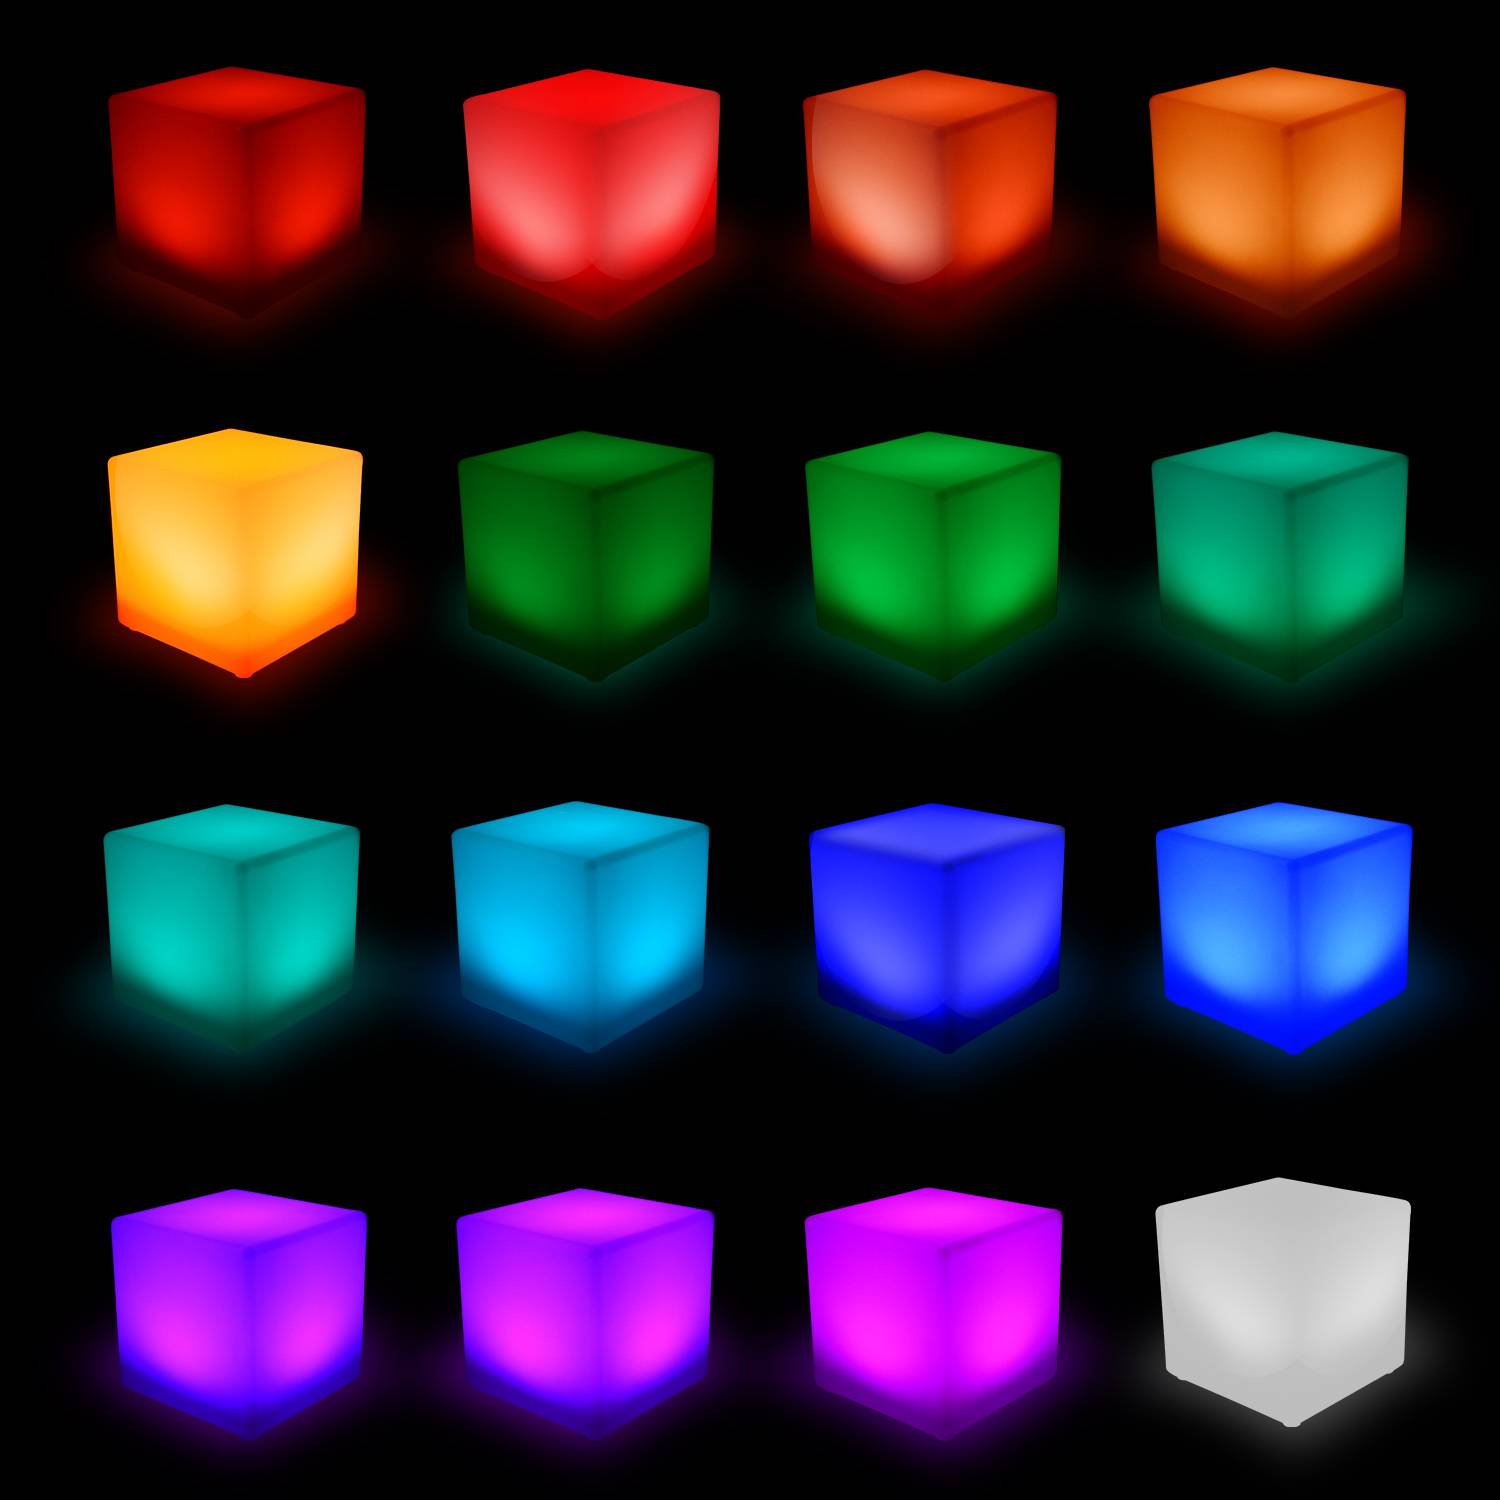 Cubo luminoso LED multicolor recargable sin cables para exterior  - 16 colores  - CUBO LED 40cm Photo5